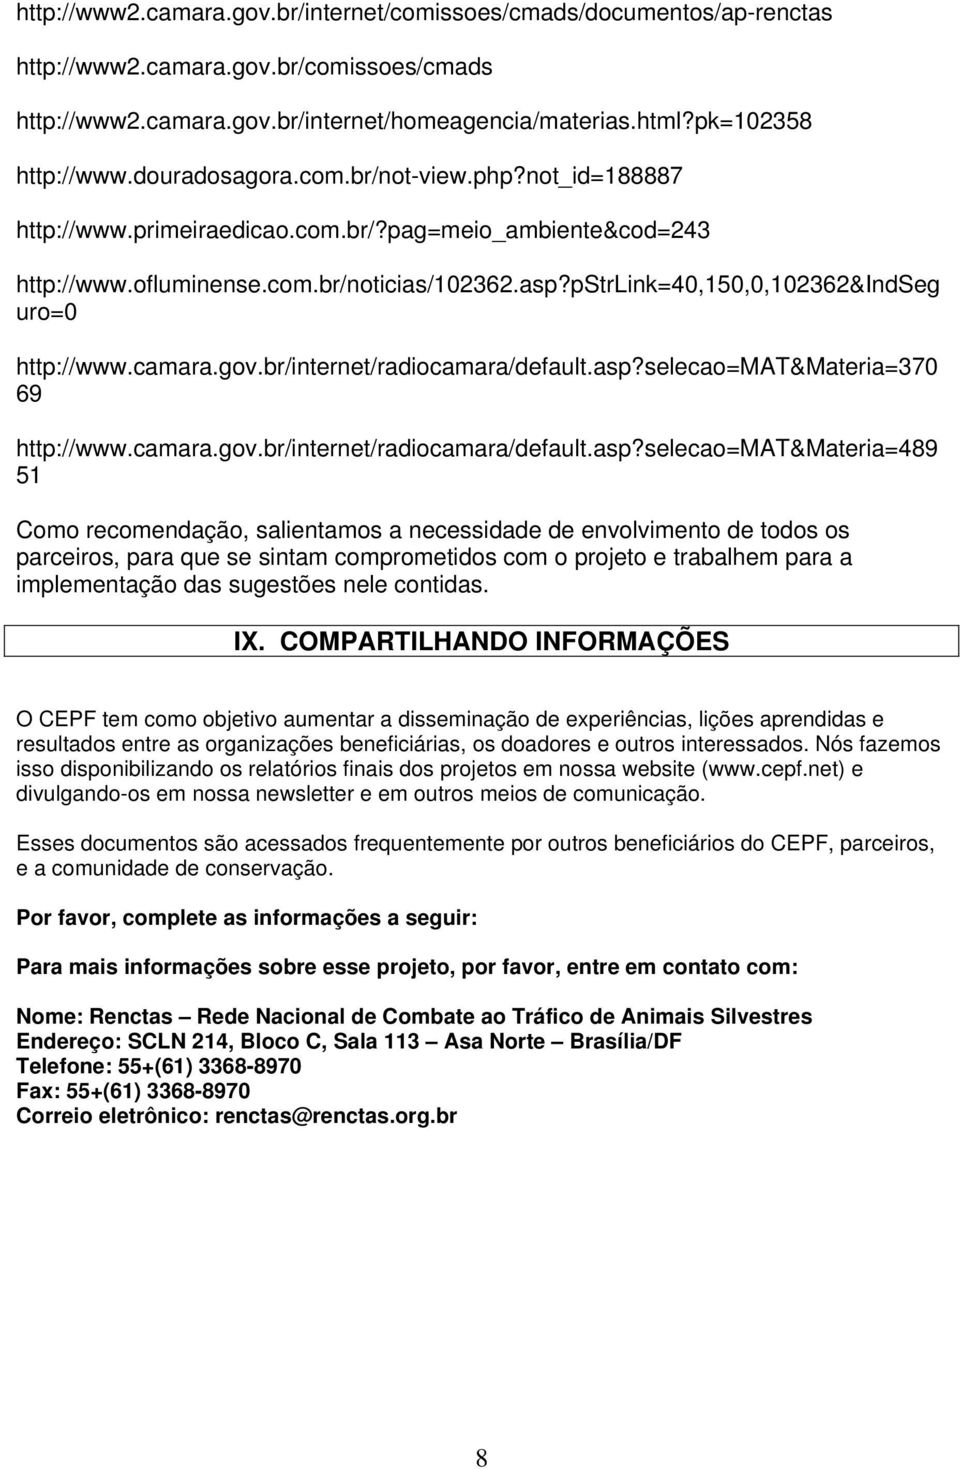 pstrlink=40,150,0,102362&indseg uro=0 http://www.camara.gov.br/internet/radiocamara/default.asp?